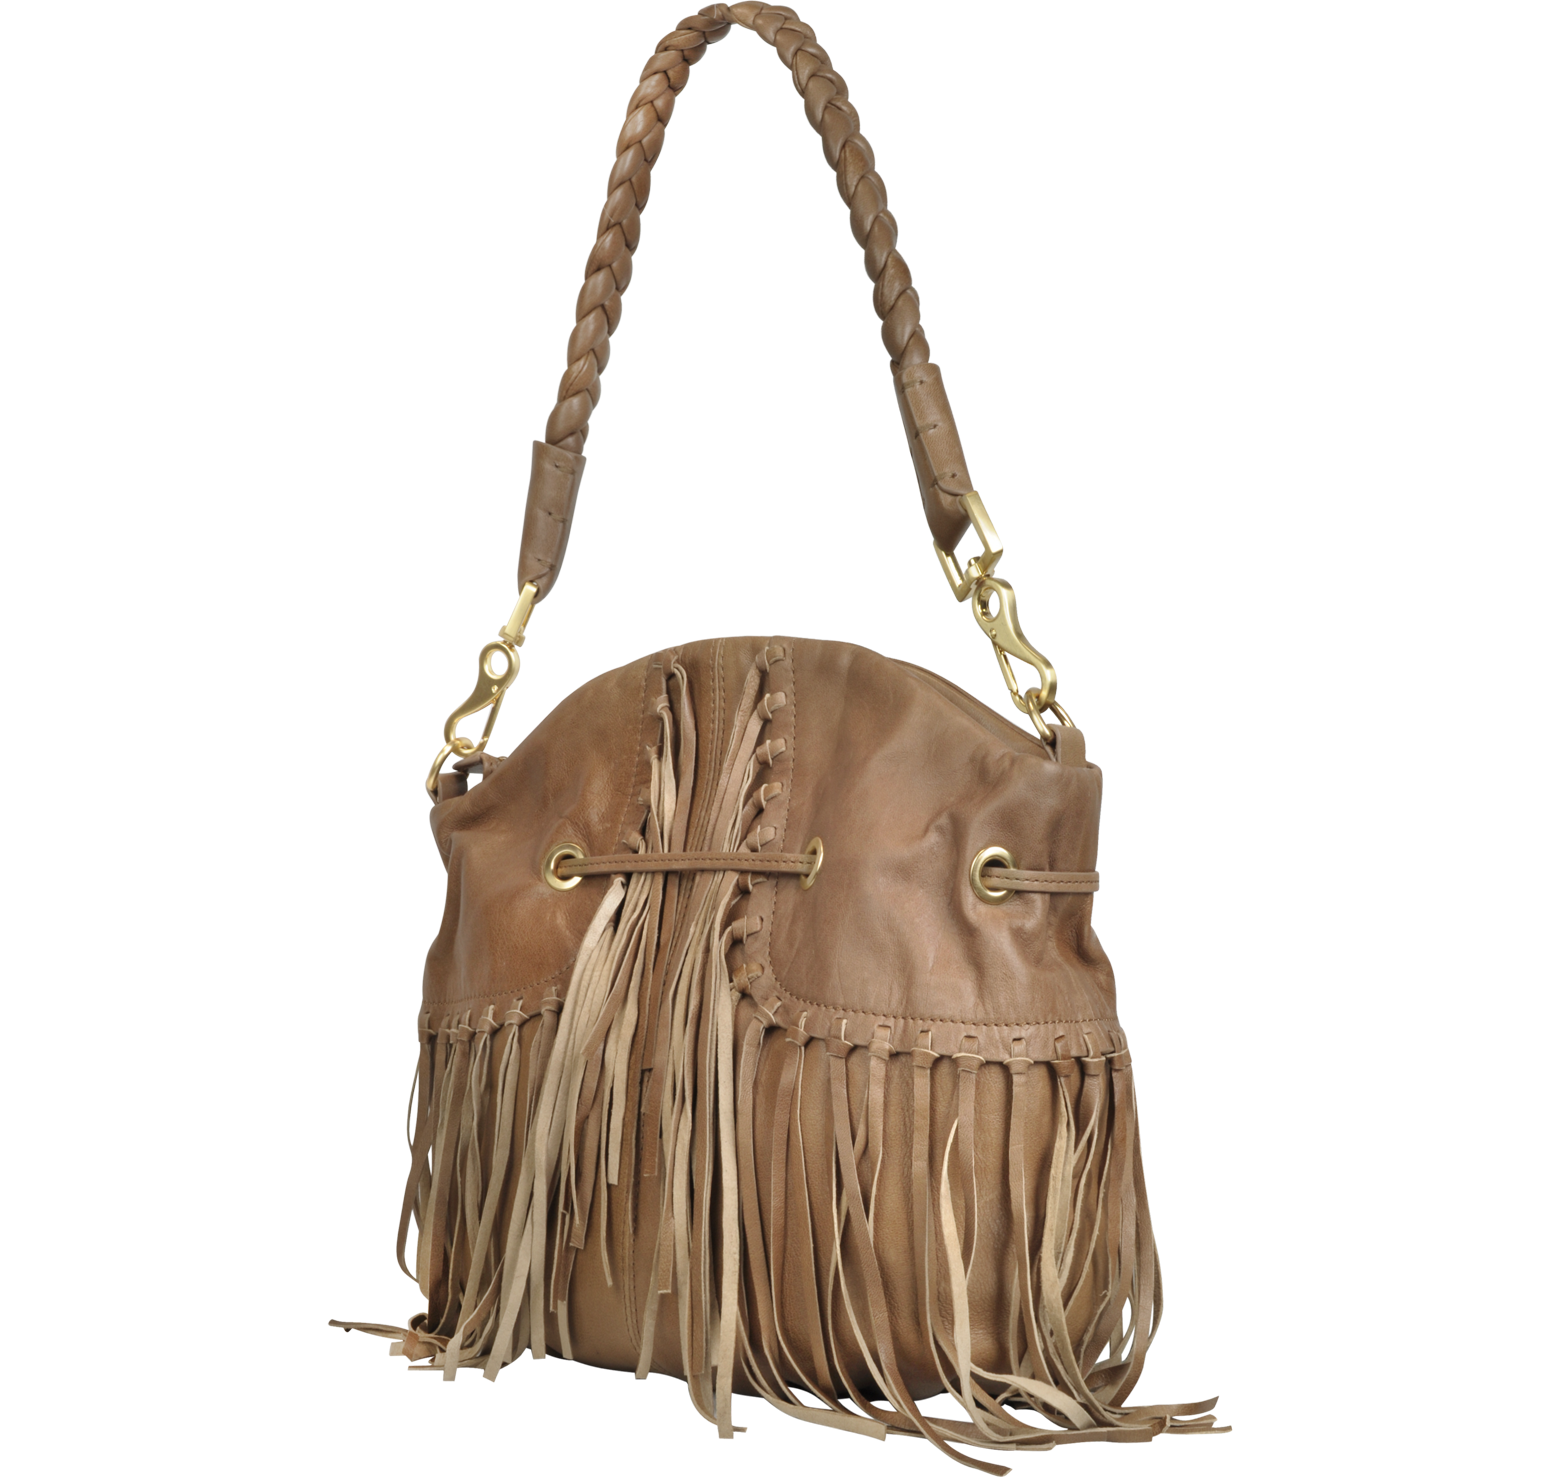 Francesco Biasia Kilburn Saffiano Leather Small Bowler Bag, $405, Forzieri